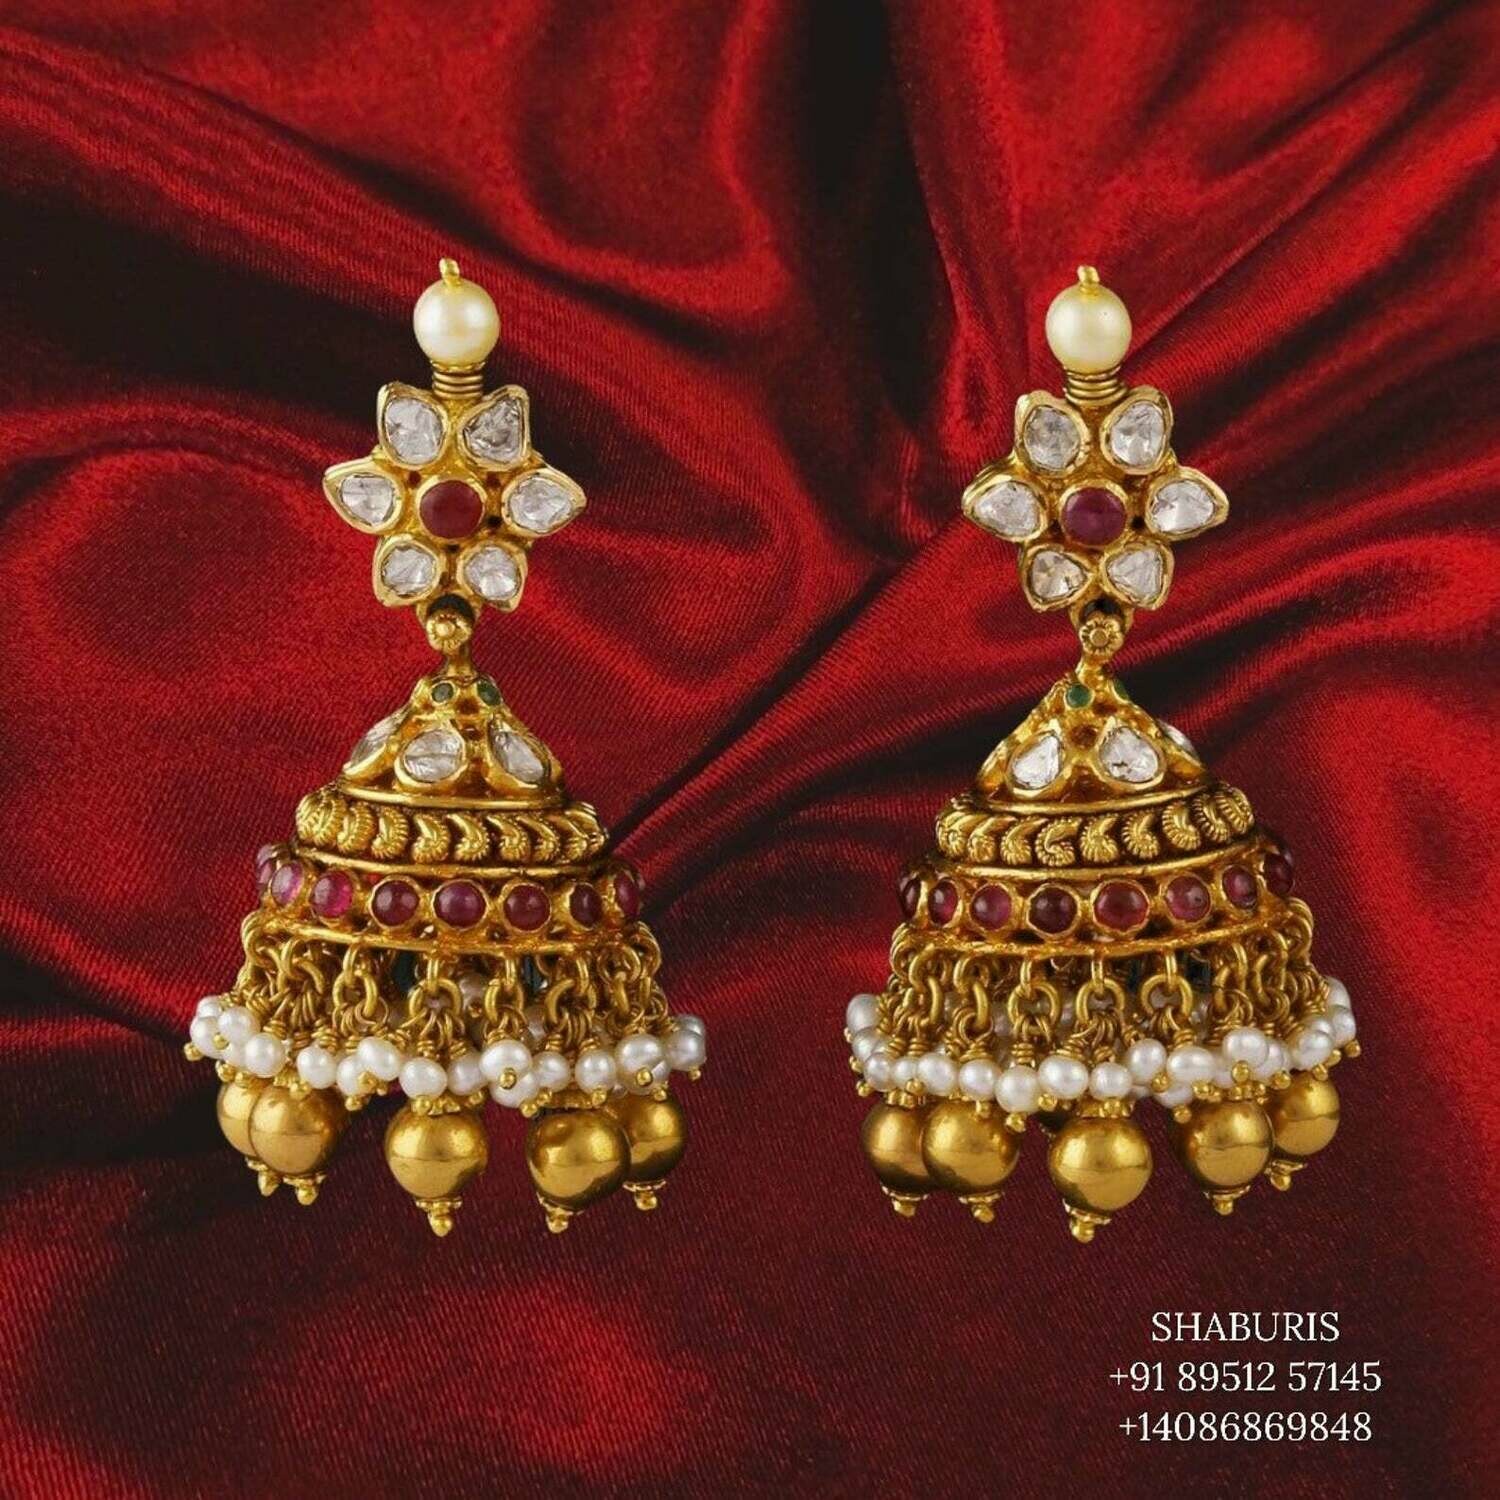 Jhumka Jewellery Designs,South Indian Jewellery,Indian Jewelry,peacock Jhumka,indian jewelry online,latest indian jewellery -NIHIRA-SHABURIS